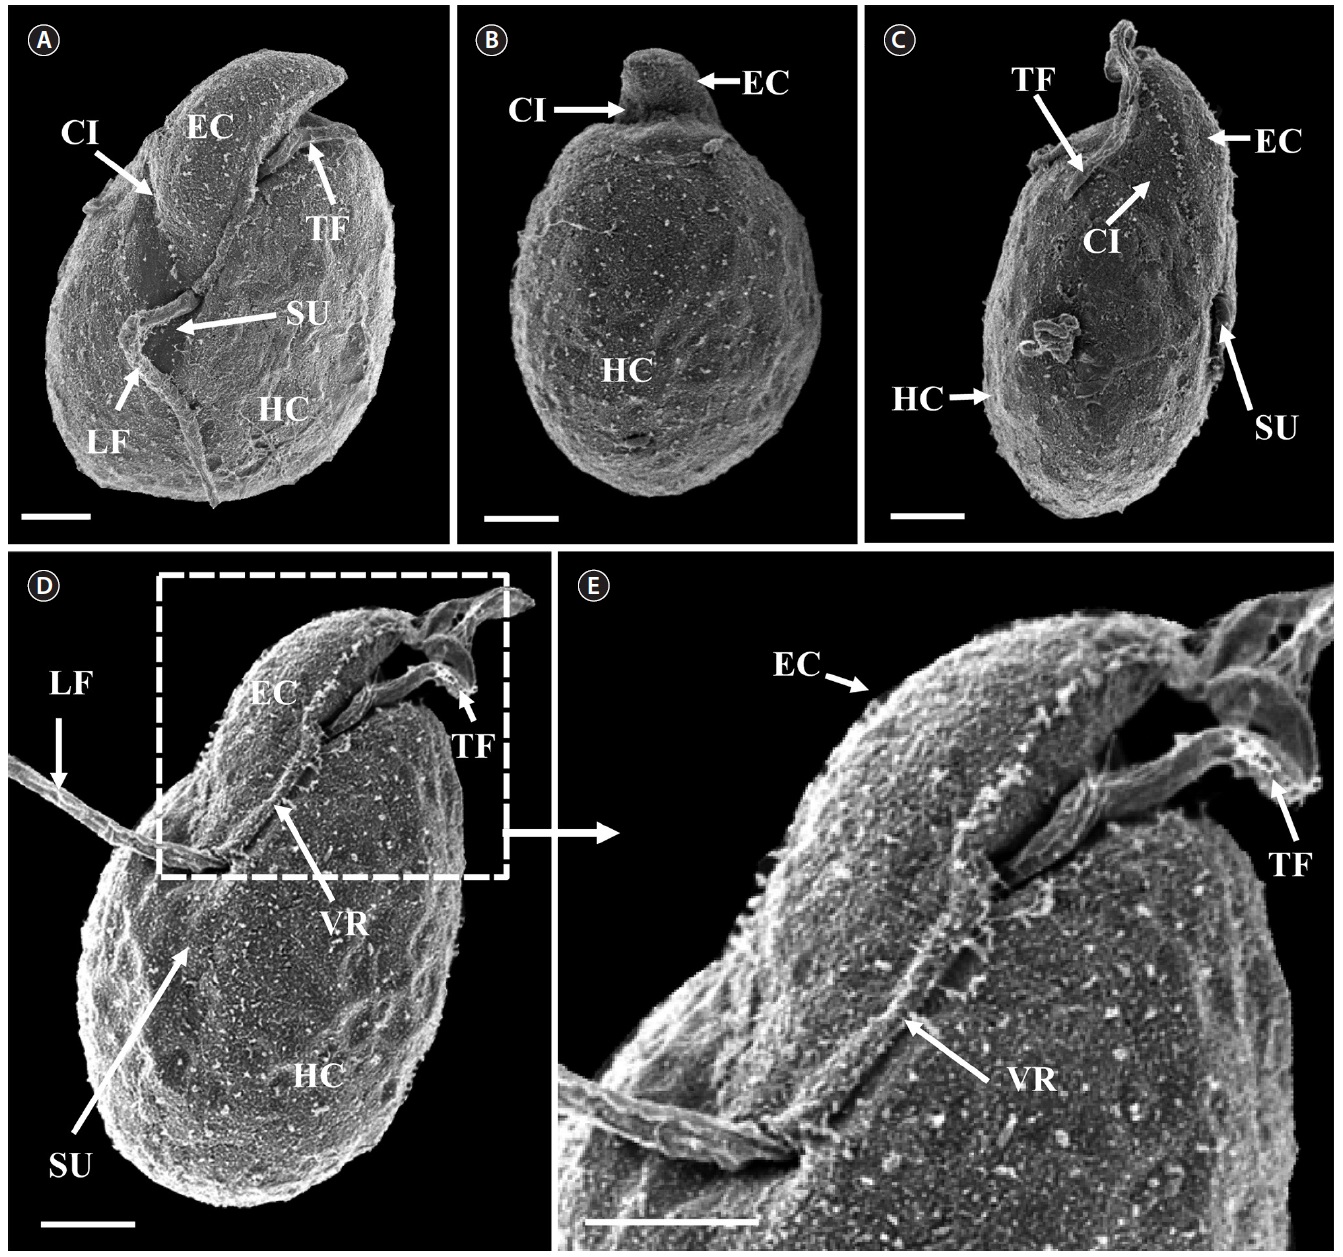 Micrographs of the Korean strain of Amphidinium massartii AMJJ1 taken using scanning electron microscopy. (A) Ventral view showing the tongue-shaped epicone (EC), cingulum (CI), transverse flagellum (TF), sulcus (SU), longitudinal flagellum (LF), and hypocone (HC). (B) Dorsal view showing EC, CI, and HC. (C) Lateral view showing the dorso-ventrally flattened EC, TF, SU, CI, and HC. (D) Ventral view showing EC, LF, TF, SU, HC, and ventral ridge (VR). (E) Enlargement of Fig. 2D showing EC, TF, and VR. Scale bars represent: A-E, 2 μm.